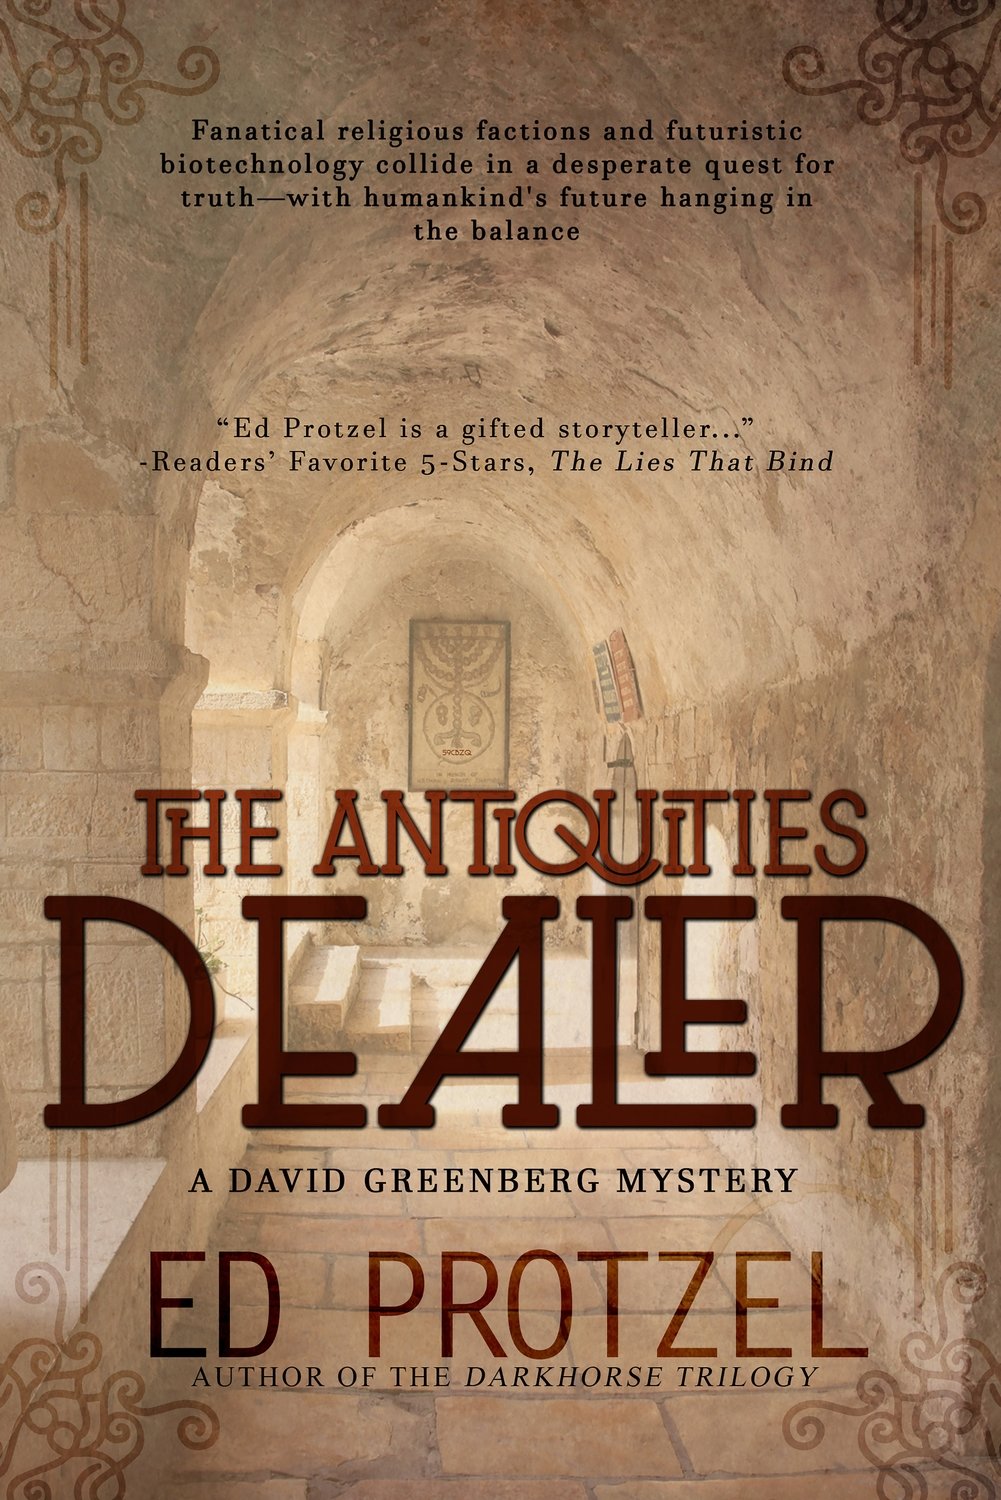 The Antiquities Dealer (A David Greenberg Mystery)